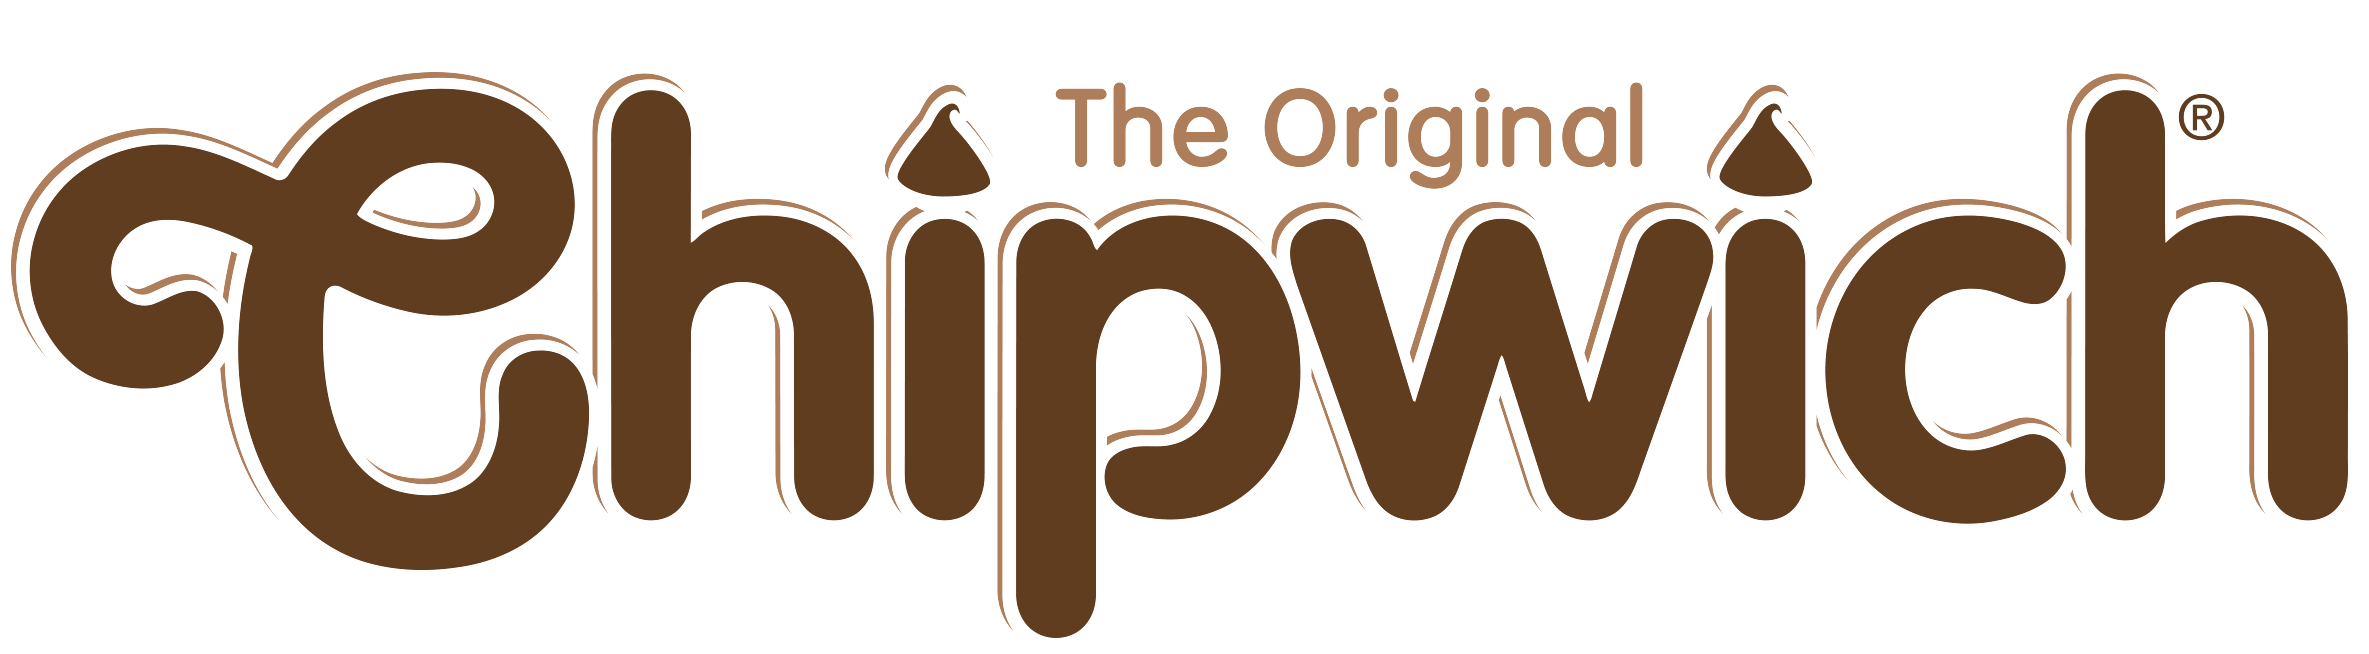 Chipwich Logo